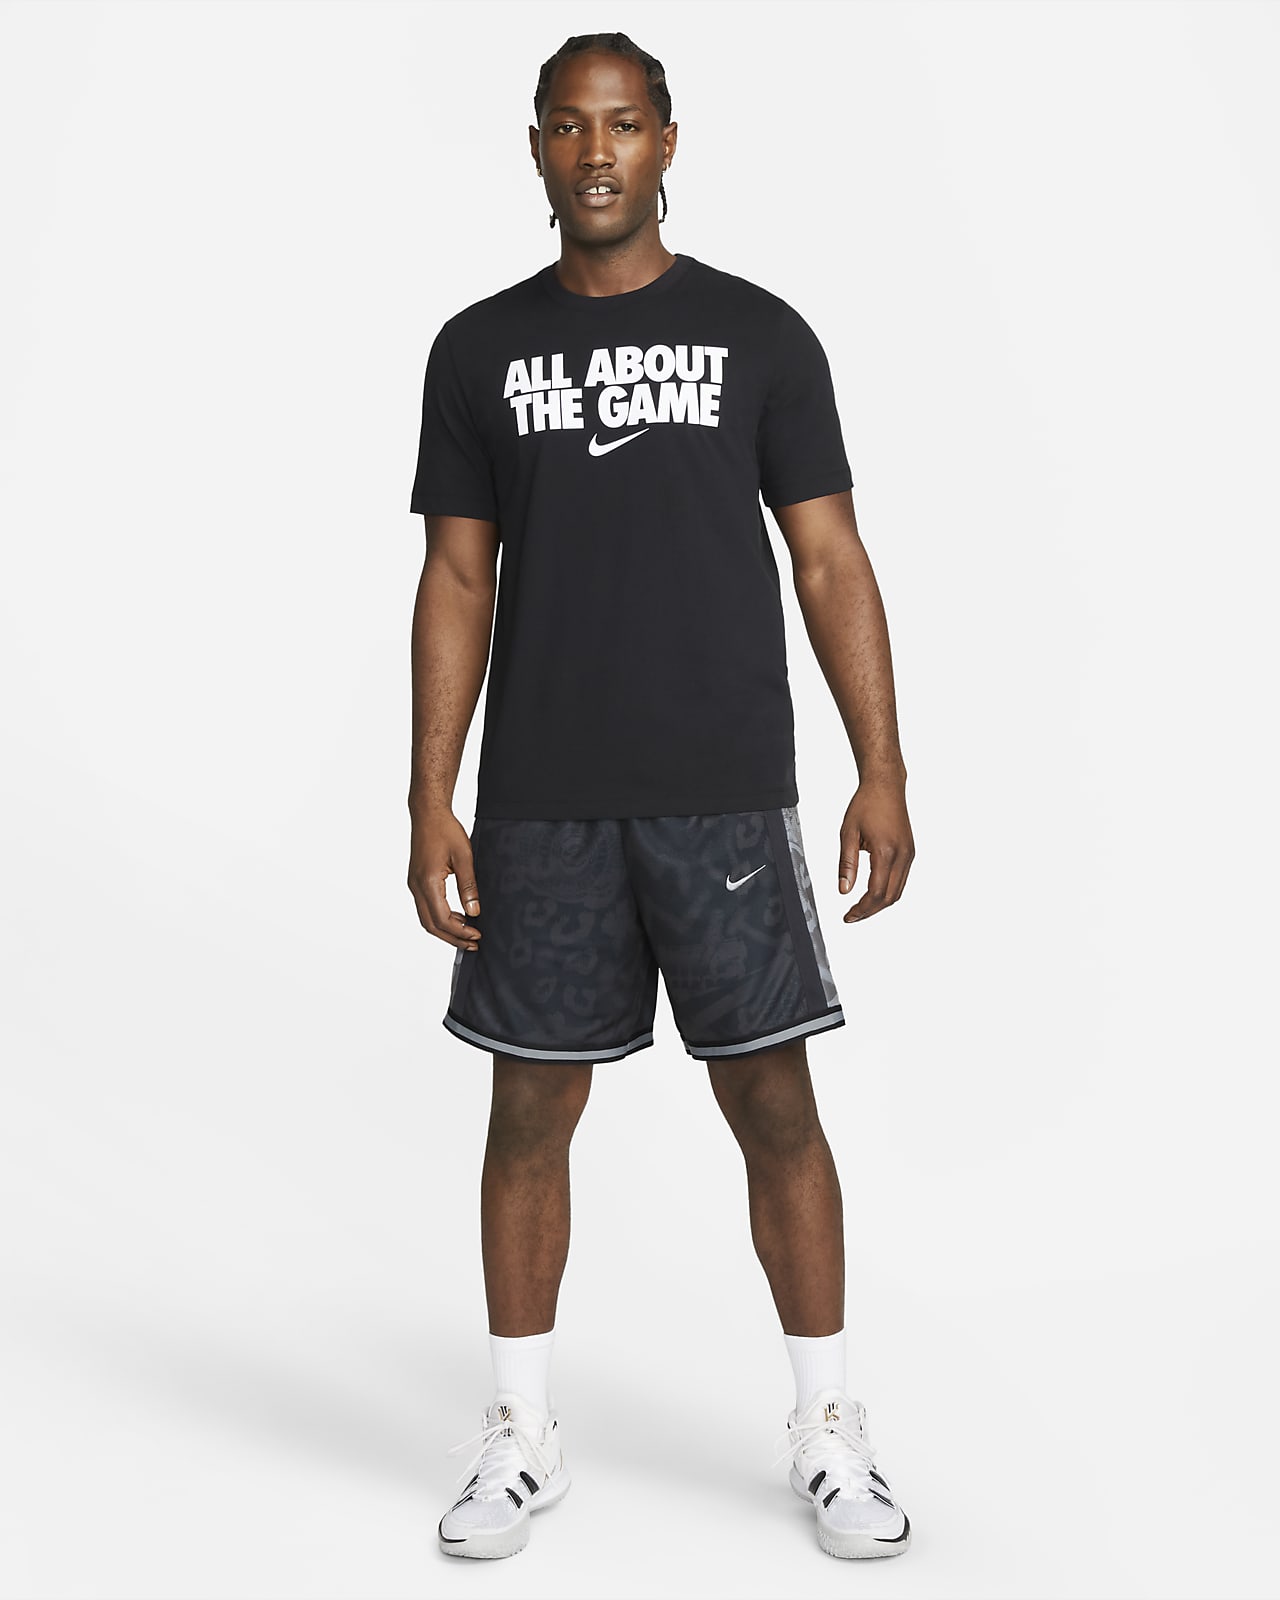 Nike Dri-FIT DNA+ Men's Basketball Shorts. 